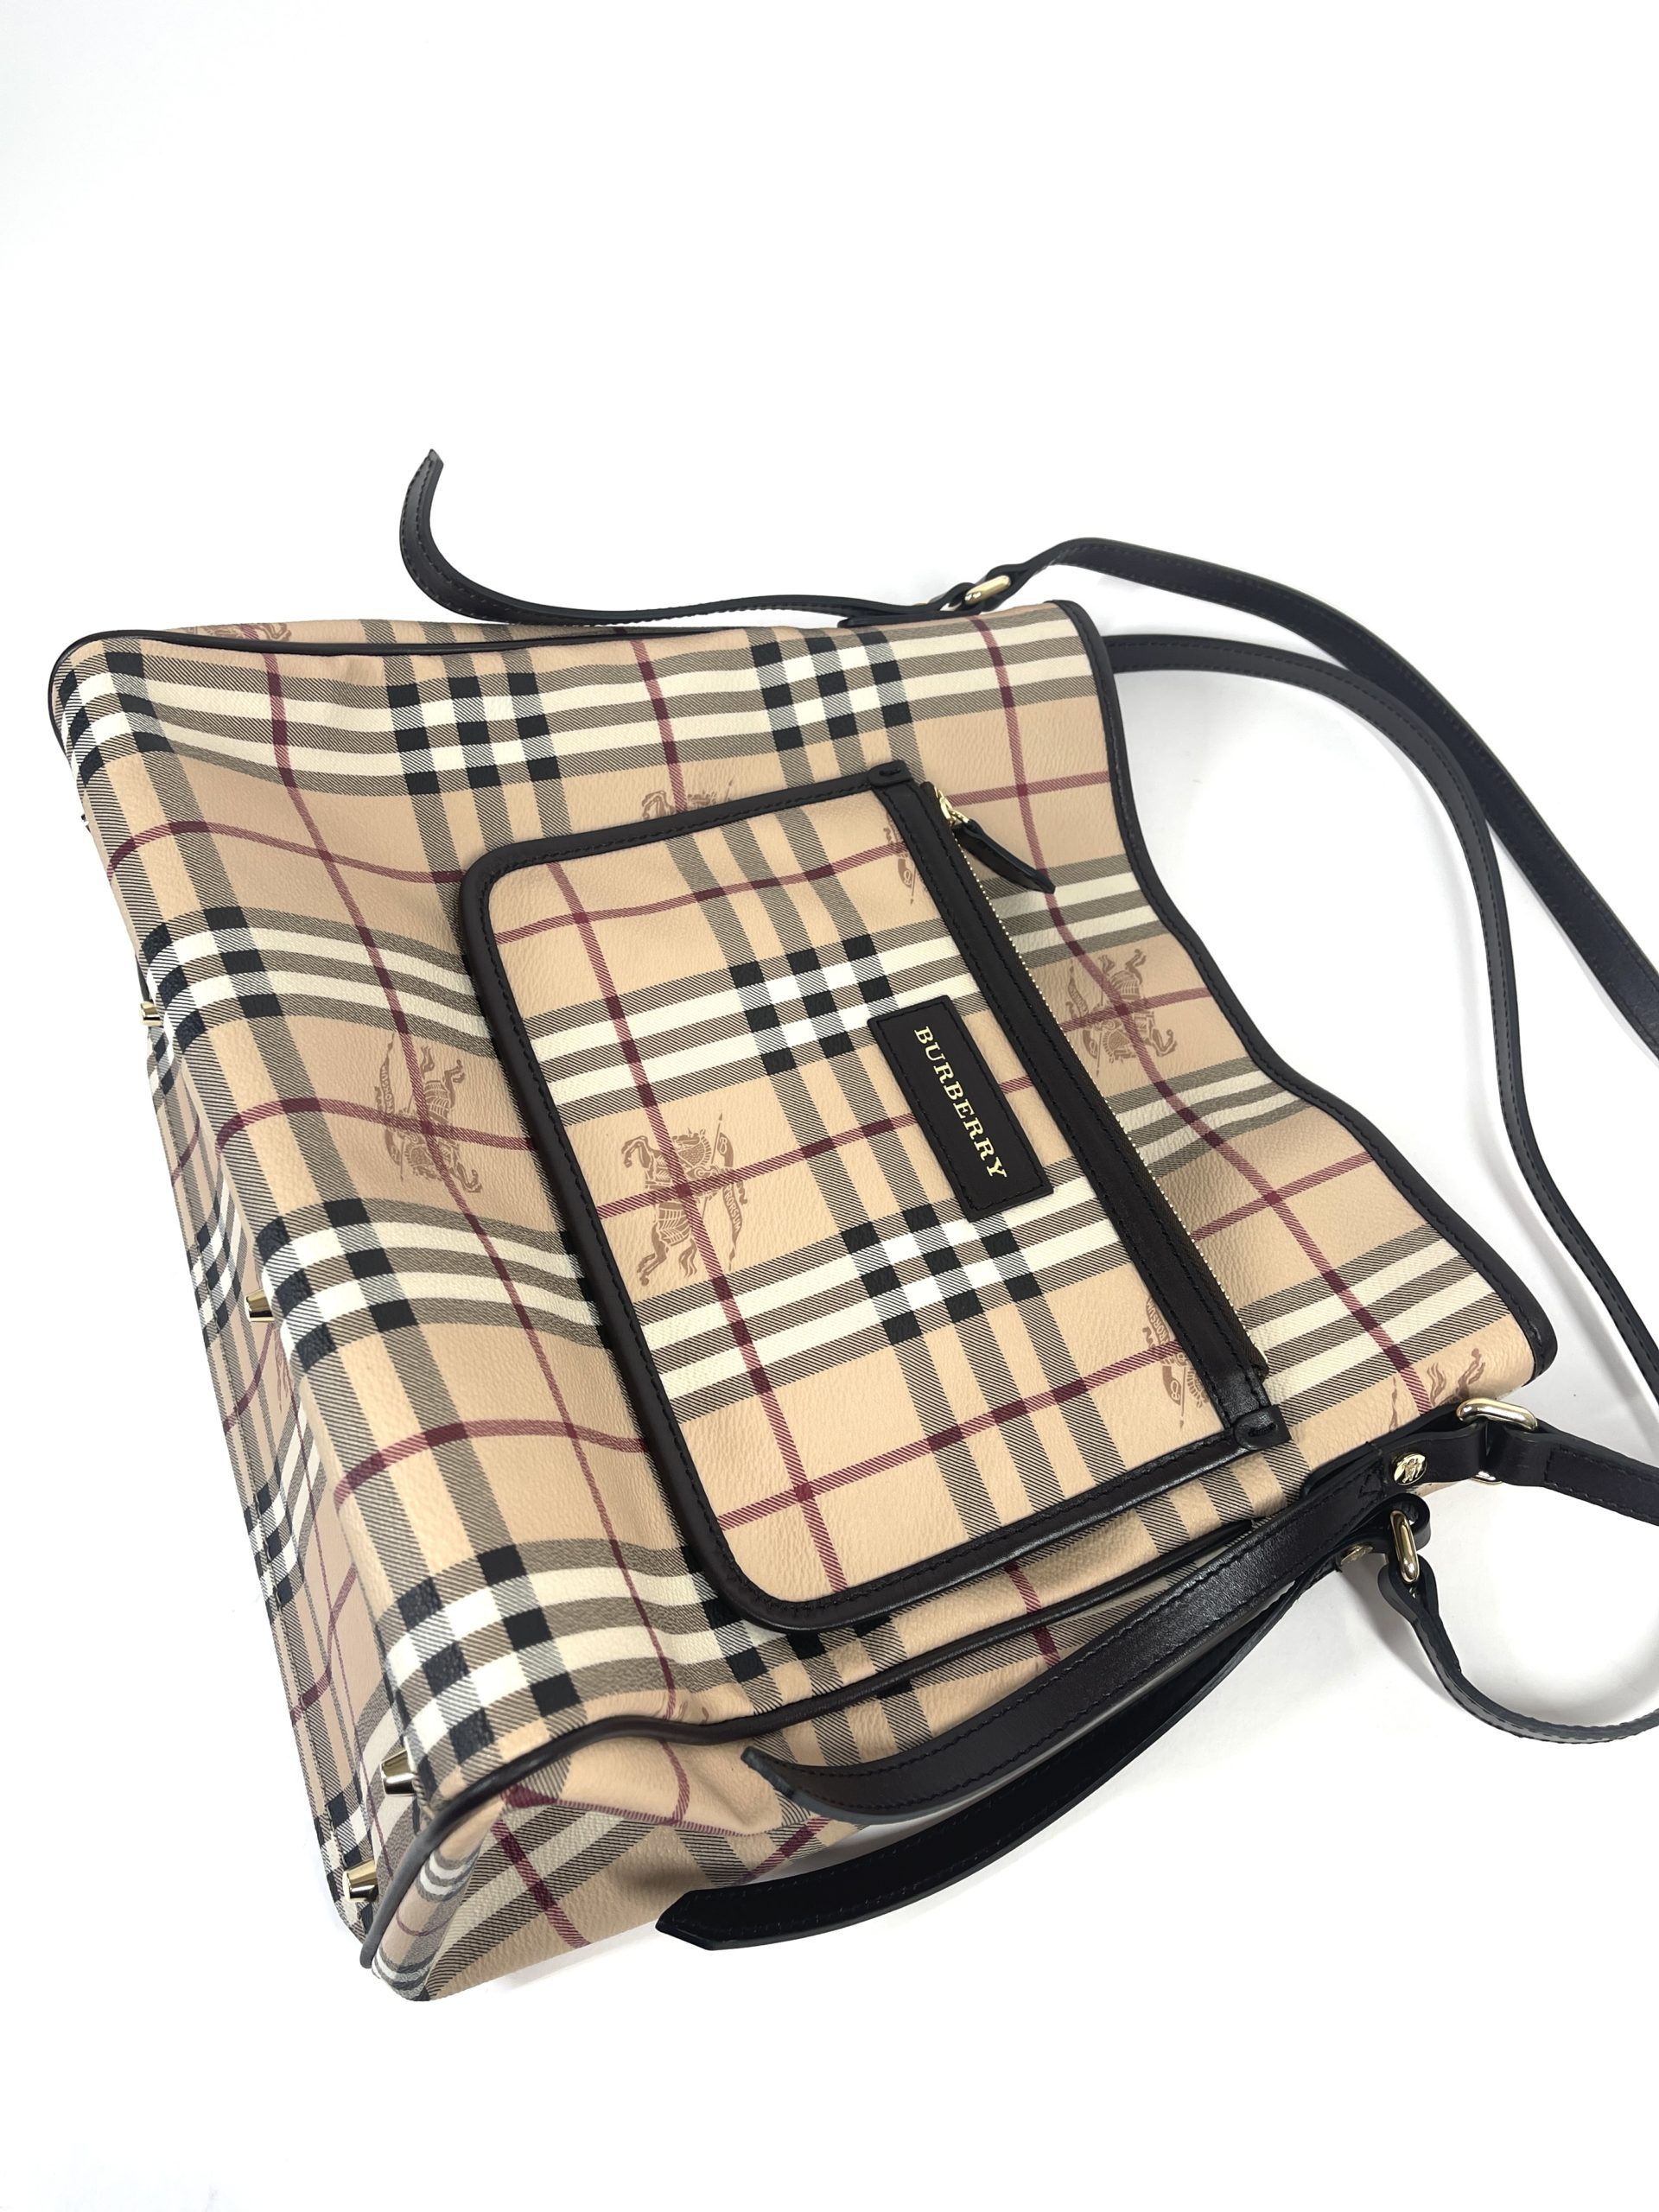 Authentic Burberry Tan Nylon Packable Tote Shoulder Bag Nova Check Lined